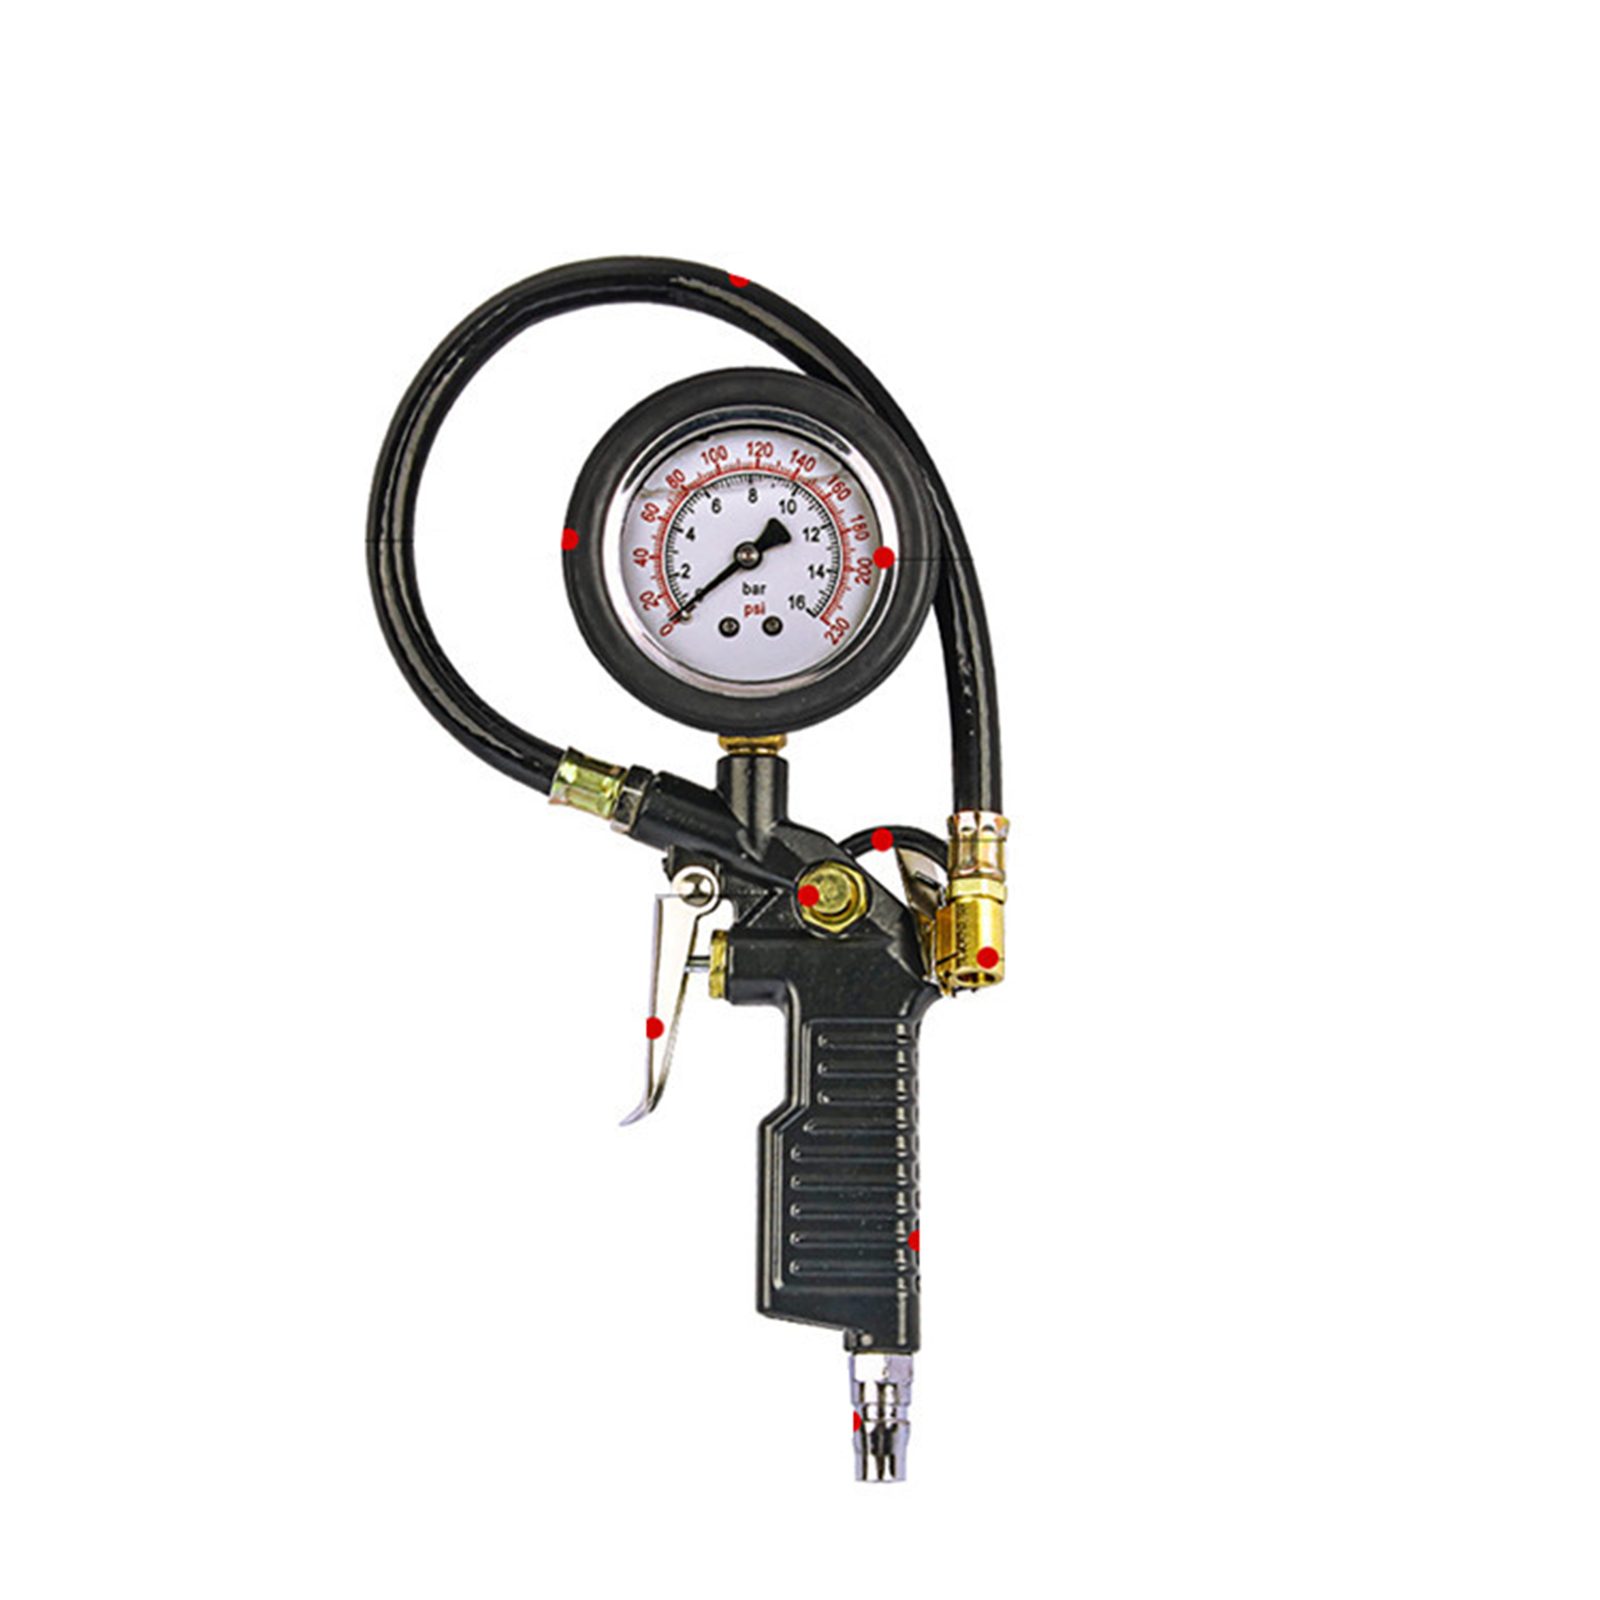 Tire Air Pressure Gauge Inflator Deflator With Rubber Hose 220bar Air Pump Compressor For RV Car Motorcycle Bike